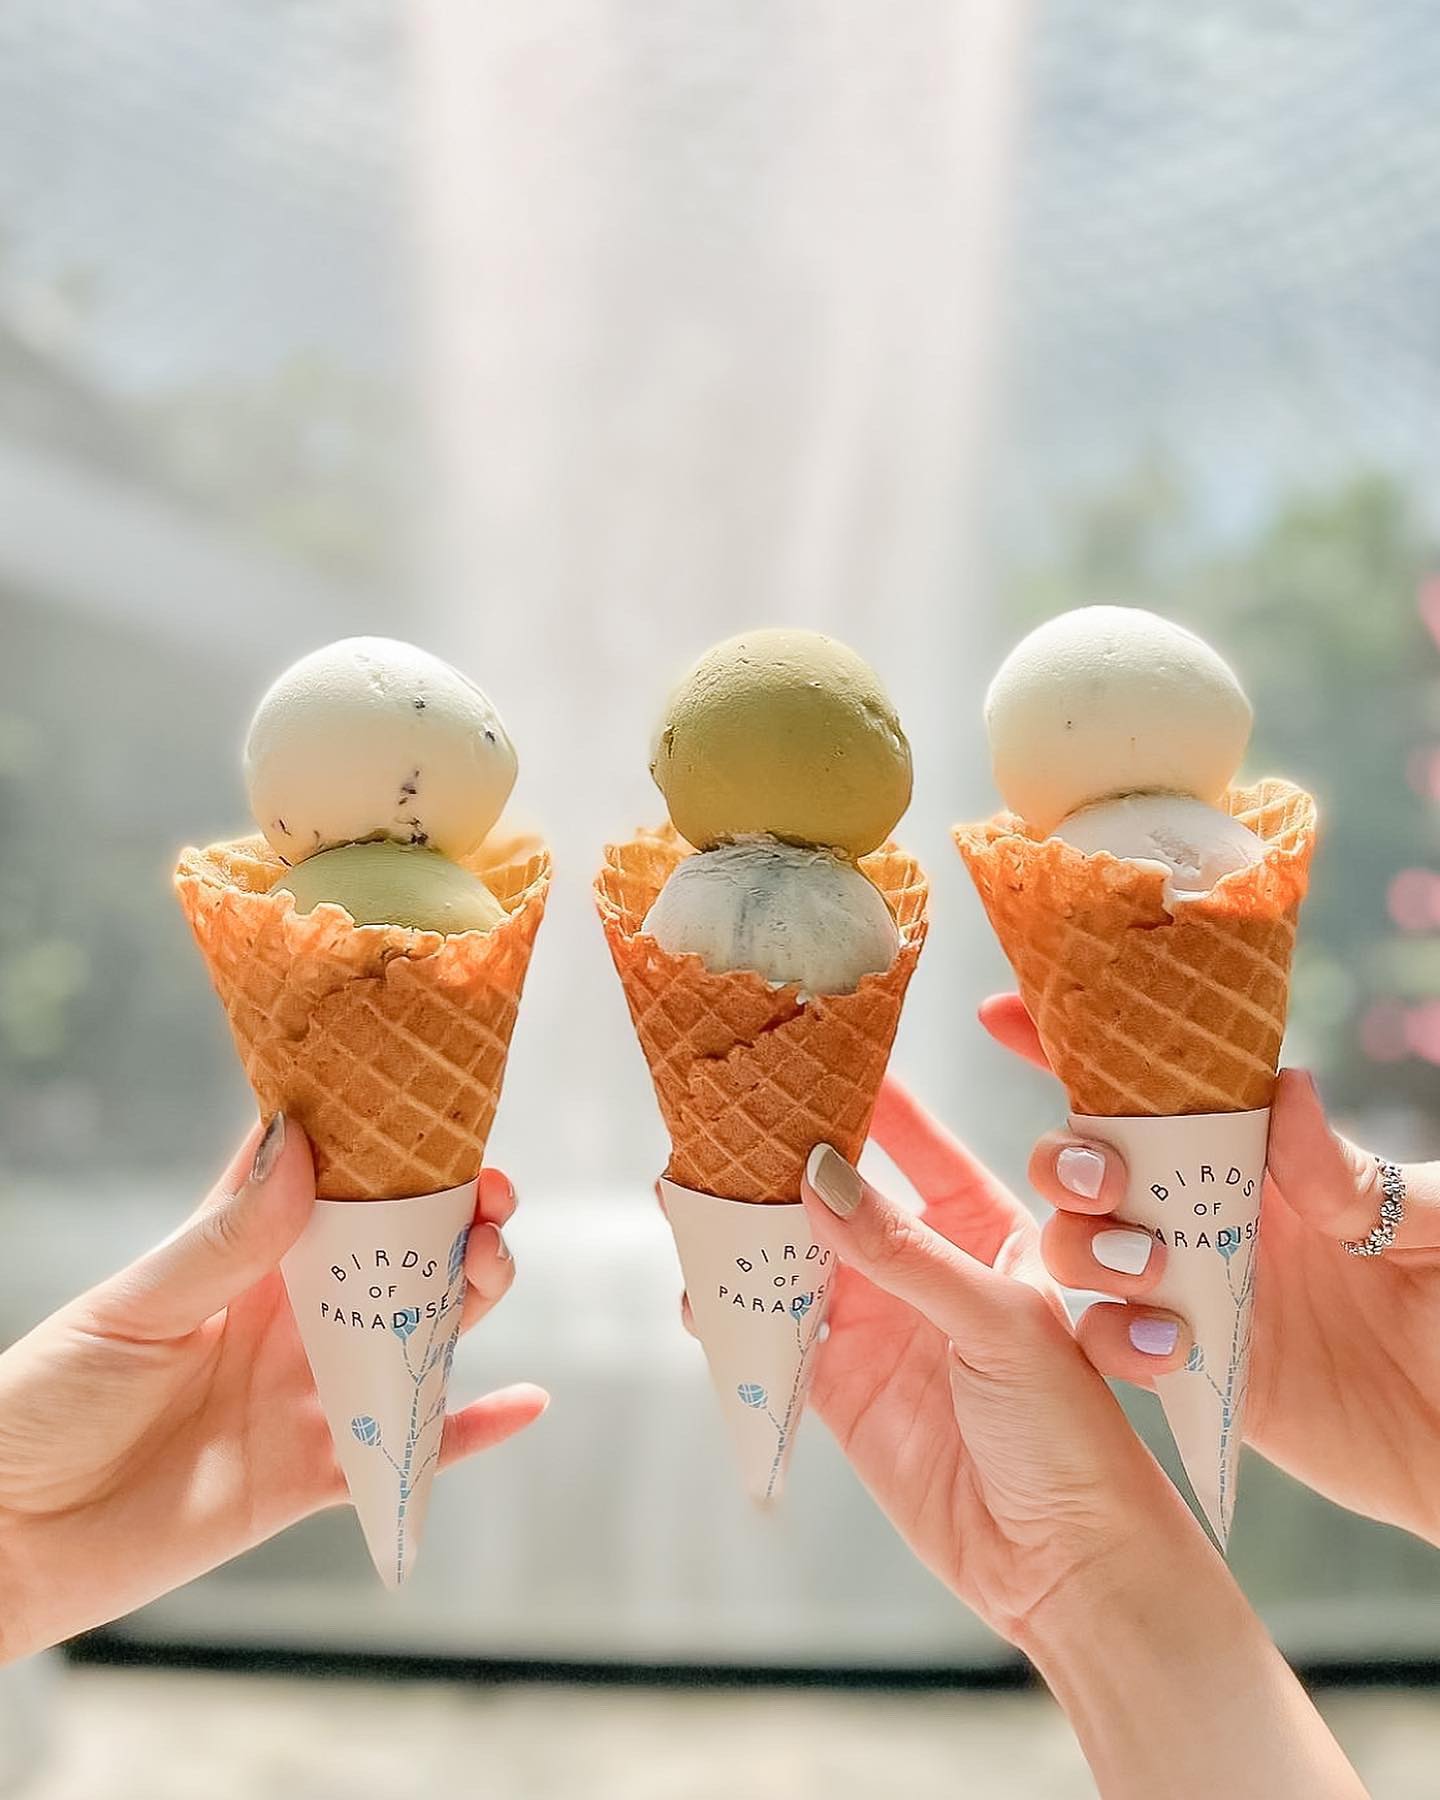 birds of paradise gelato - double scoop cones